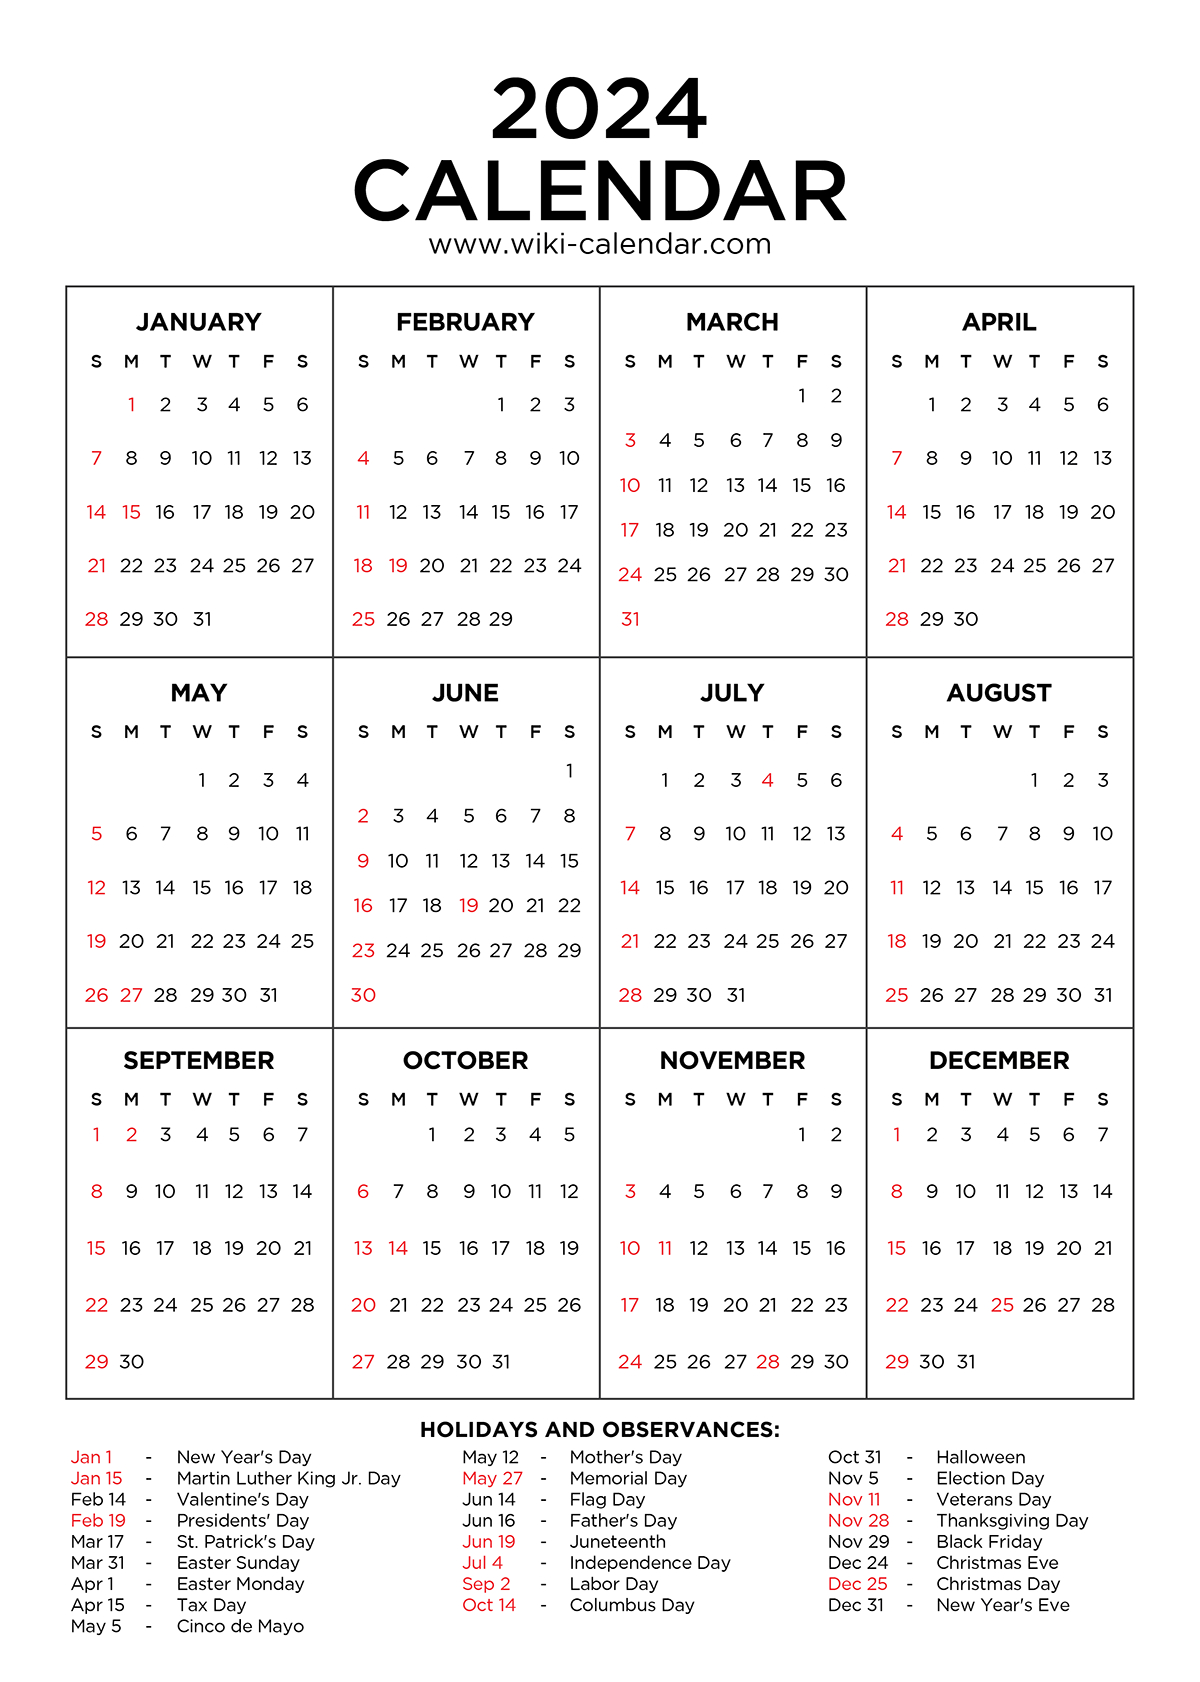 Year 2024 Calendar Printable With Holidays - Wiki Calendar | Printable Calendar Dates 2024